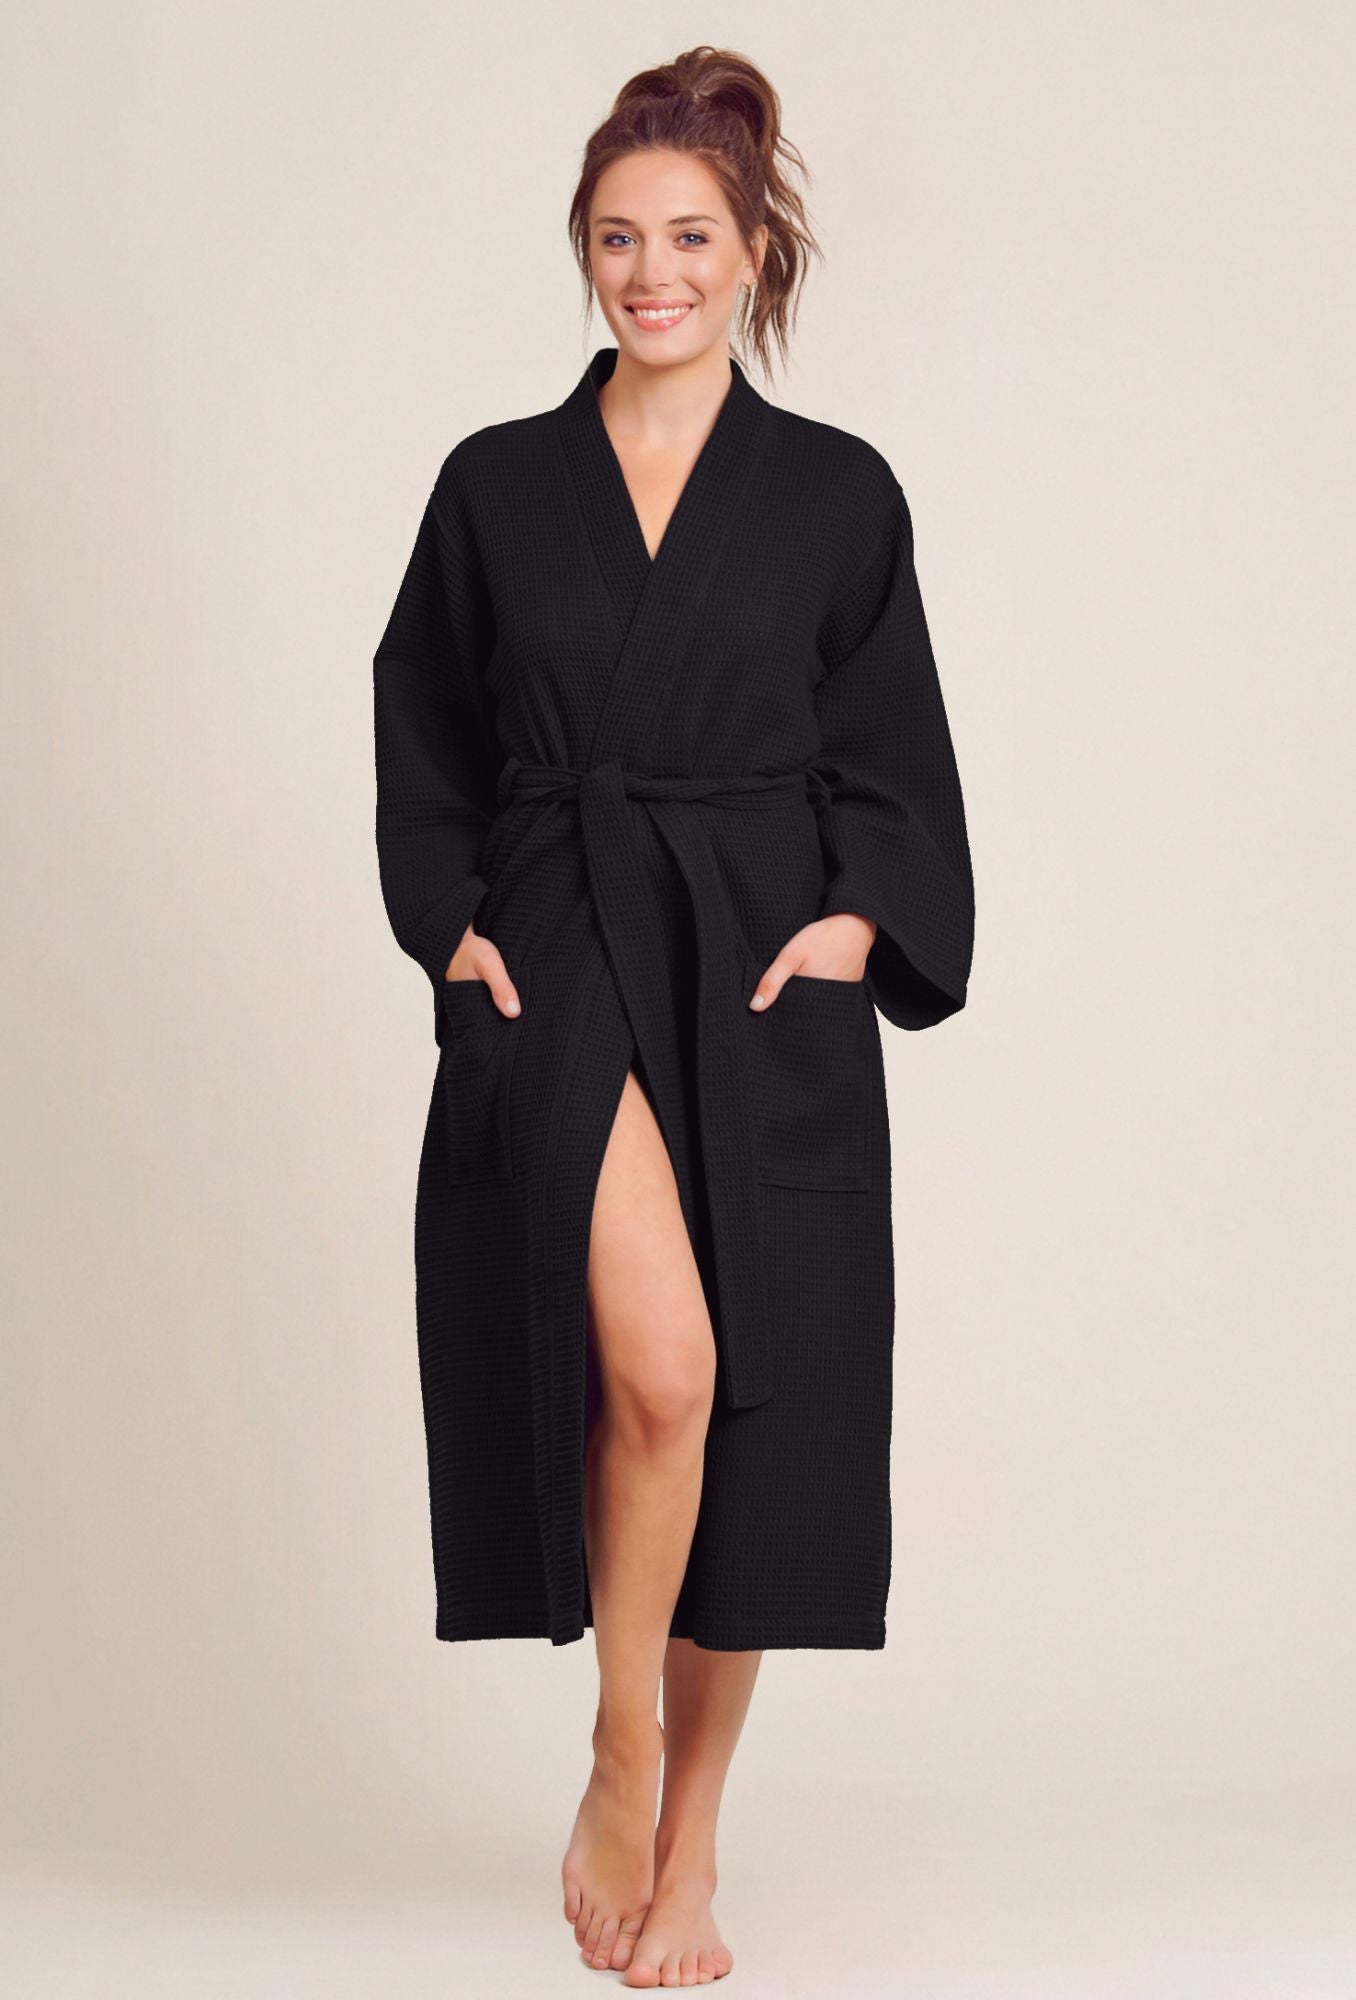 Women's Linen Robe in Dark gray | MagicLinen